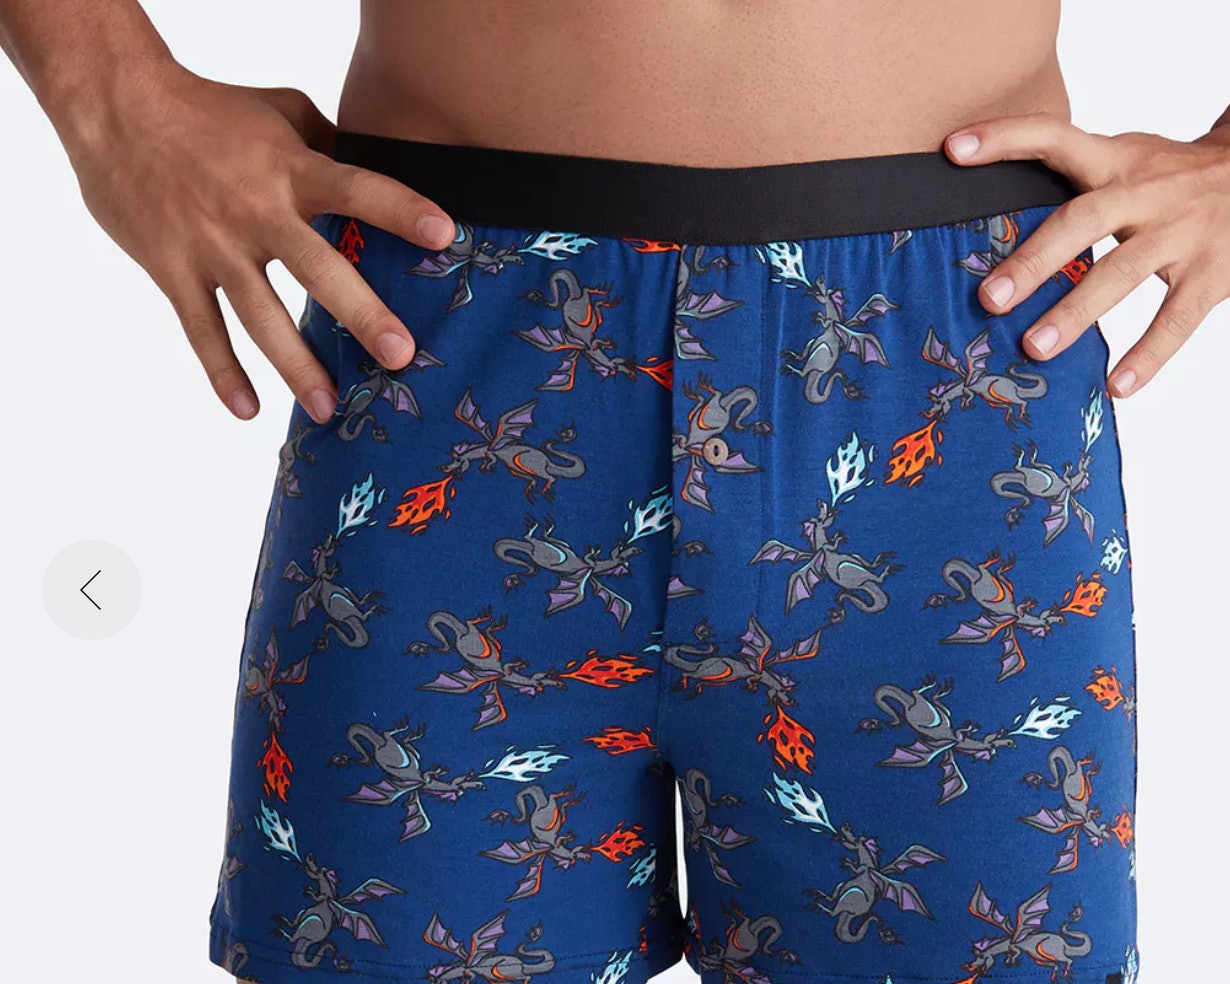 MeUndies Debuts Marvel-Themed Underwear, Loungewear Collection